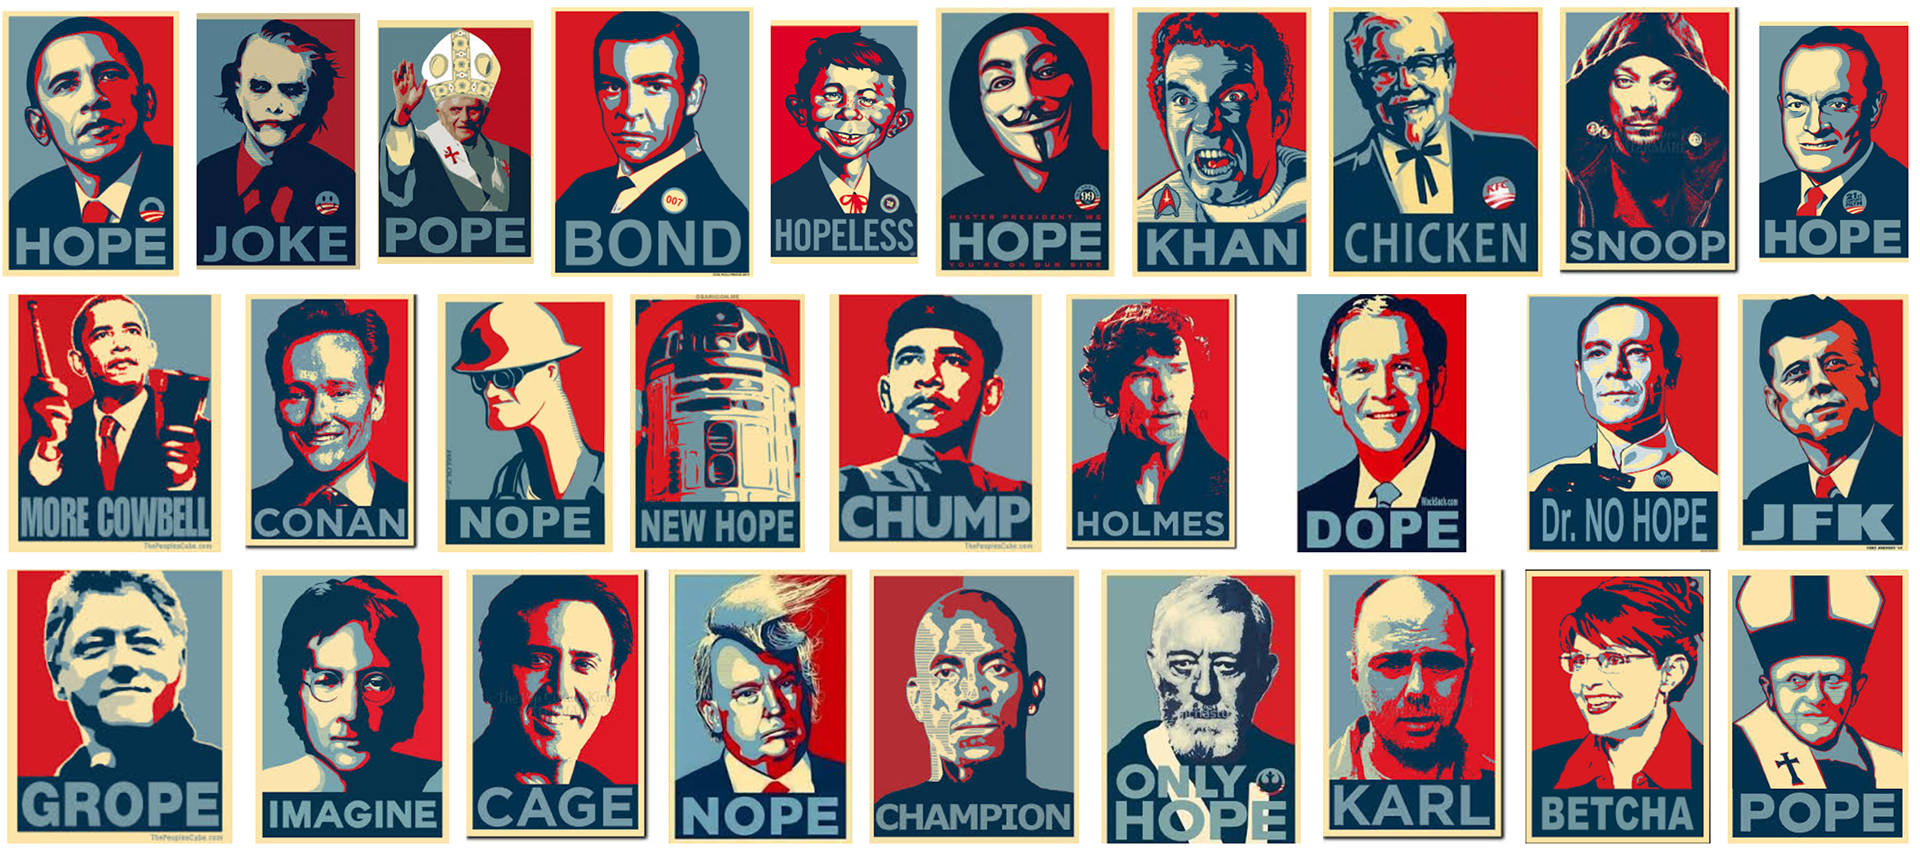 New time hope. Шепард Фейри Обама. Плакат hope. Плакаты в стиле hope. Плакат в стиле hope Обама.